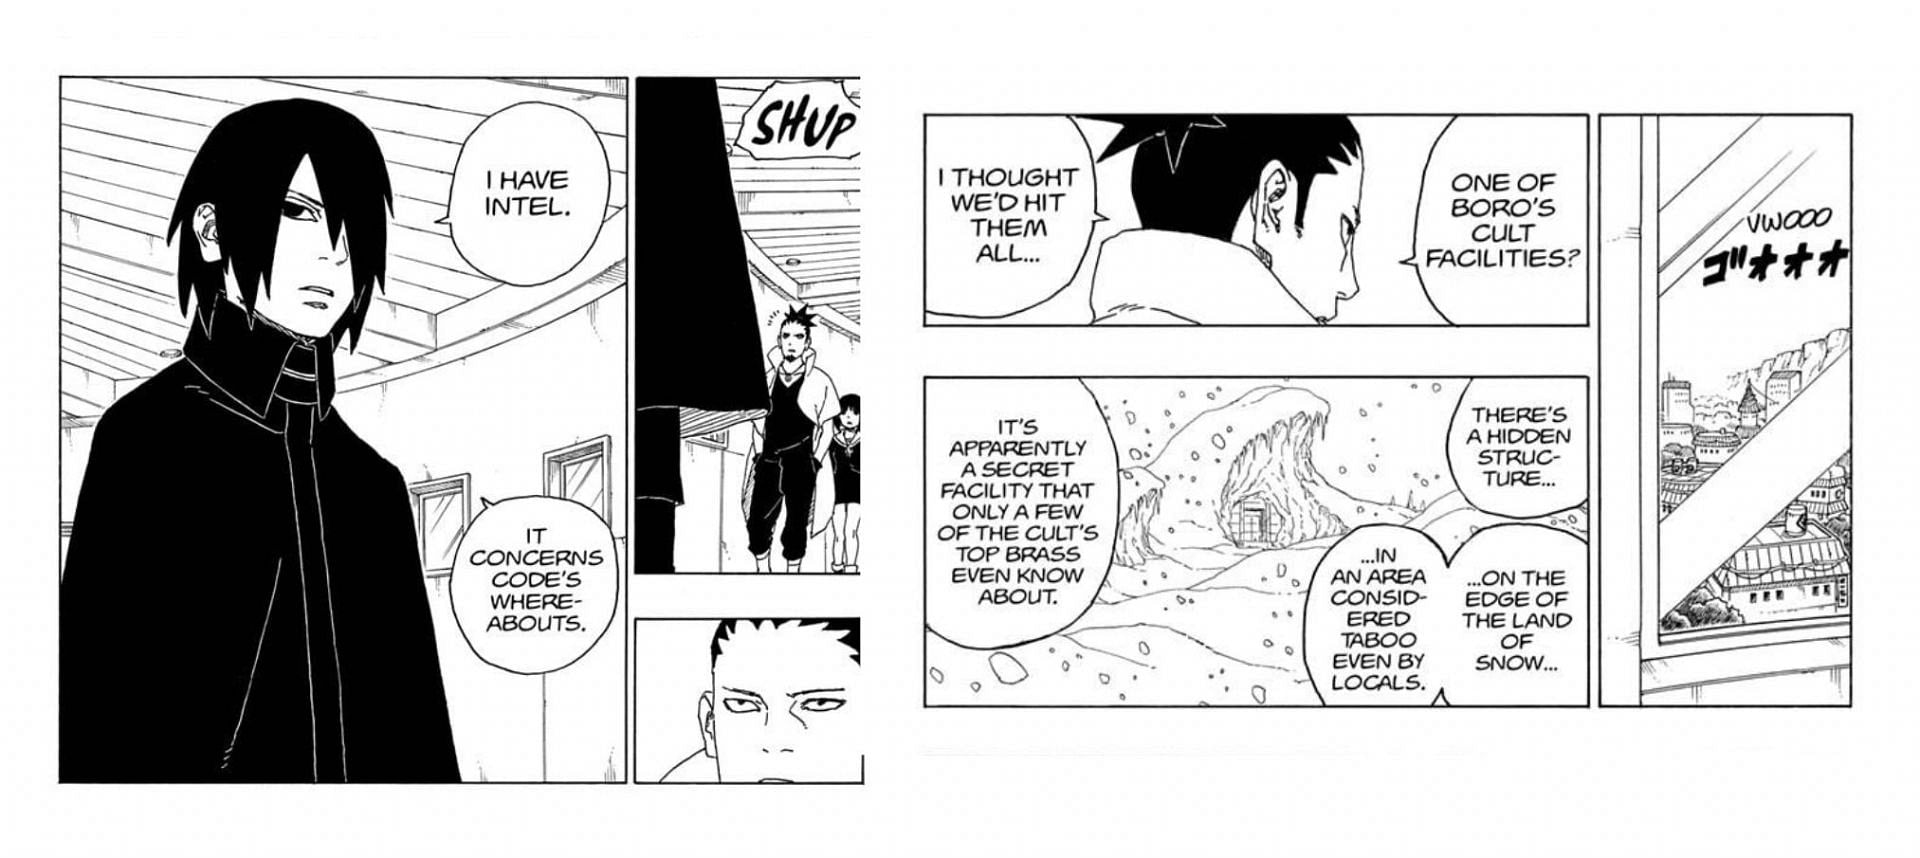 Sasuke giving intel on Code&#039;s whereabouts (Image via Shueisha)